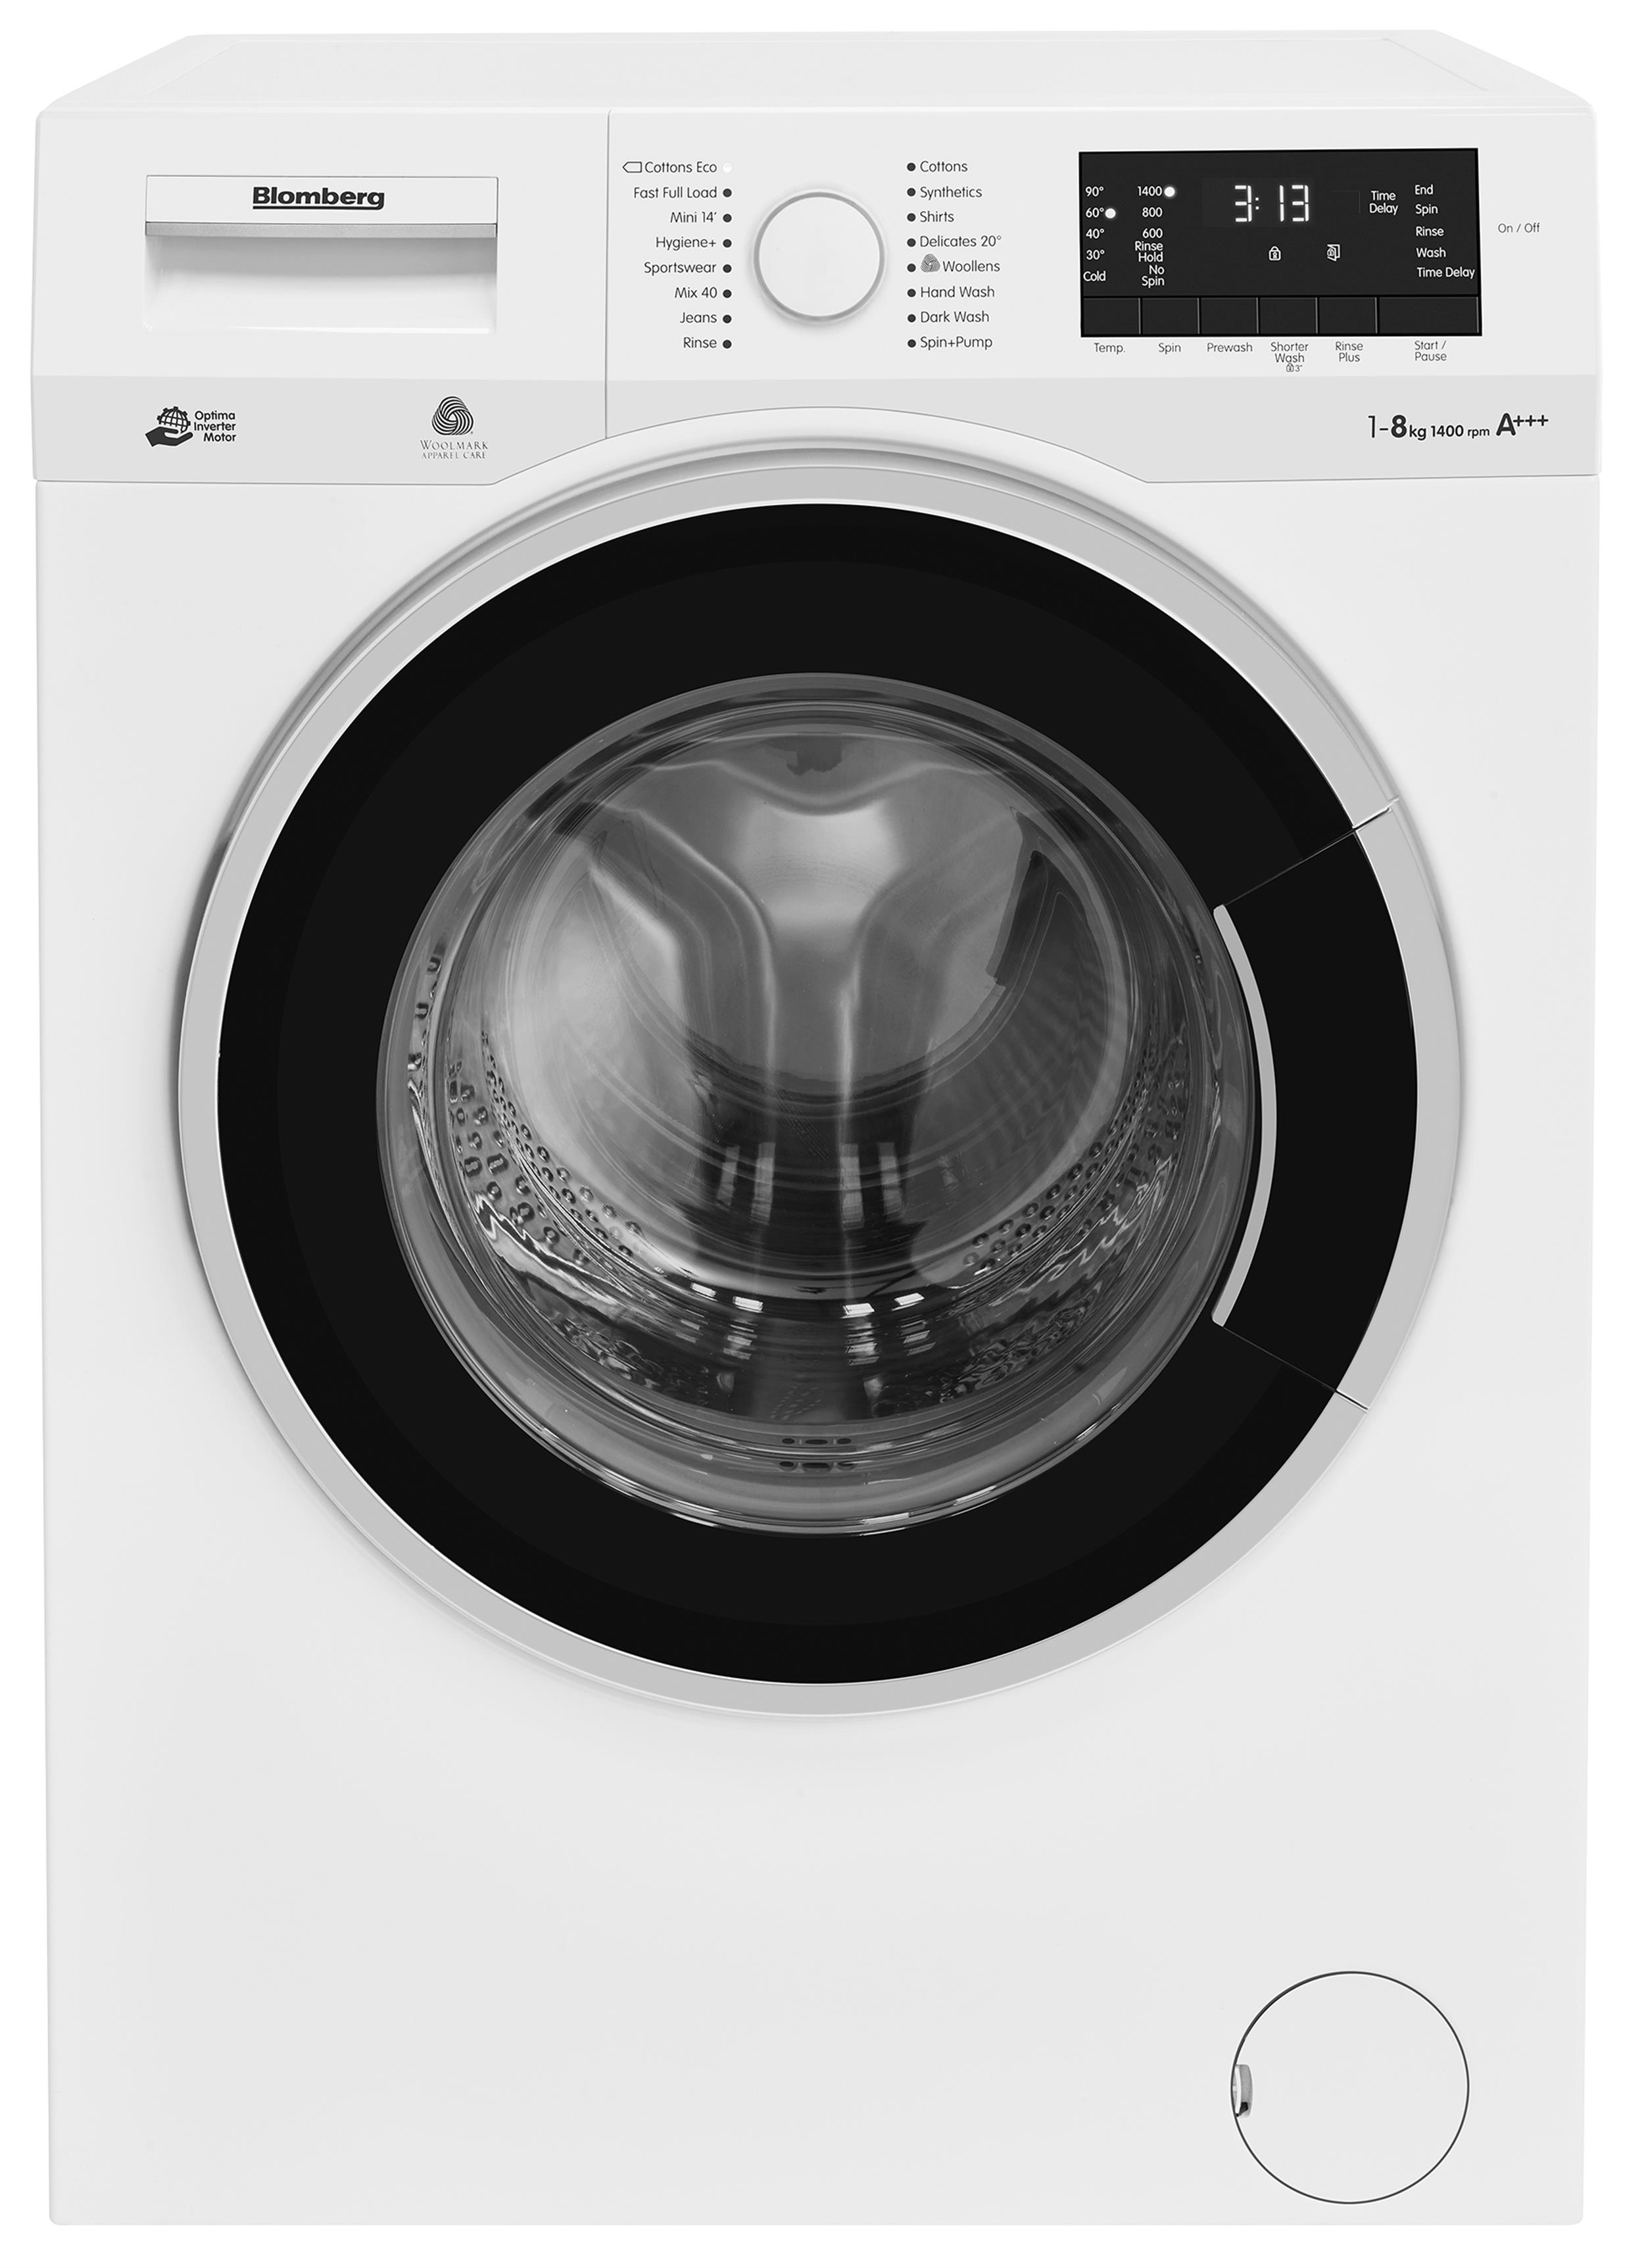 8 KG Washing Machine with Eco Cold Wash